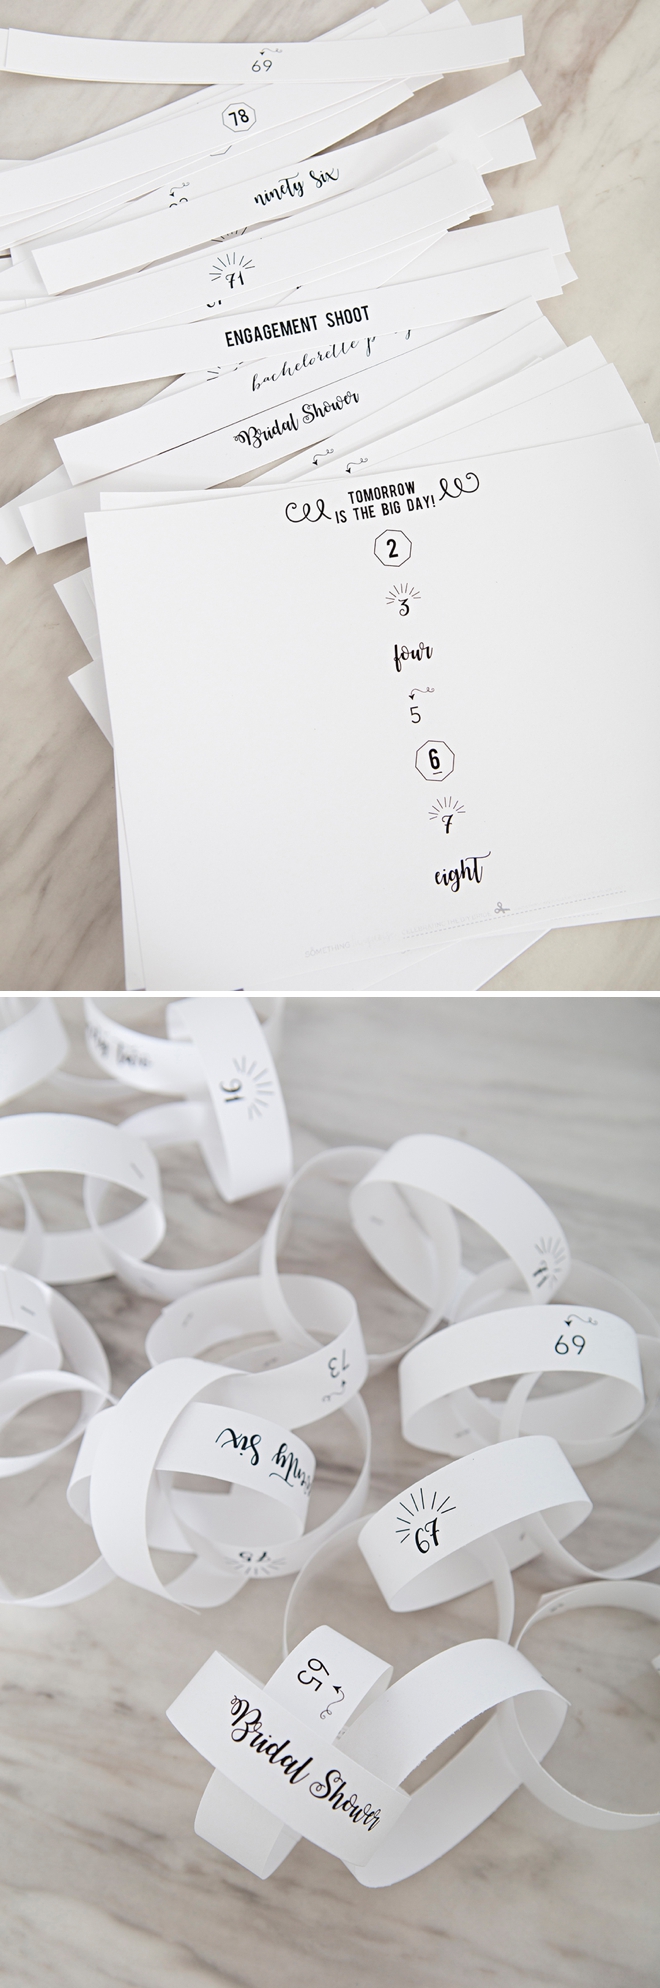 Make your own wedding countdown paper chain, so cute!